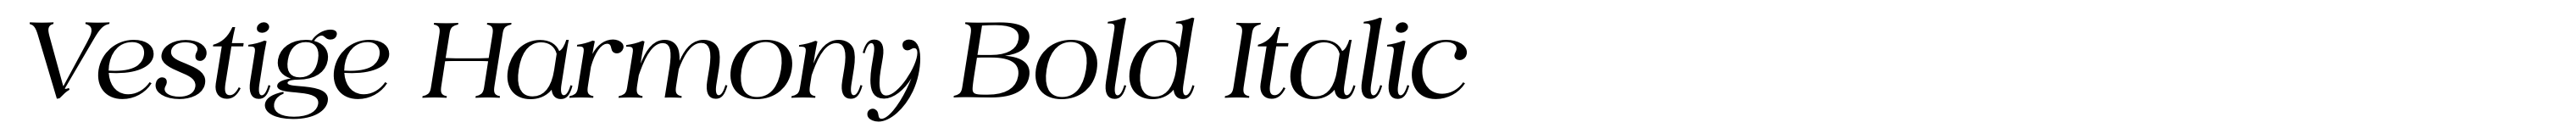 Vestige Harmony Bold Italic